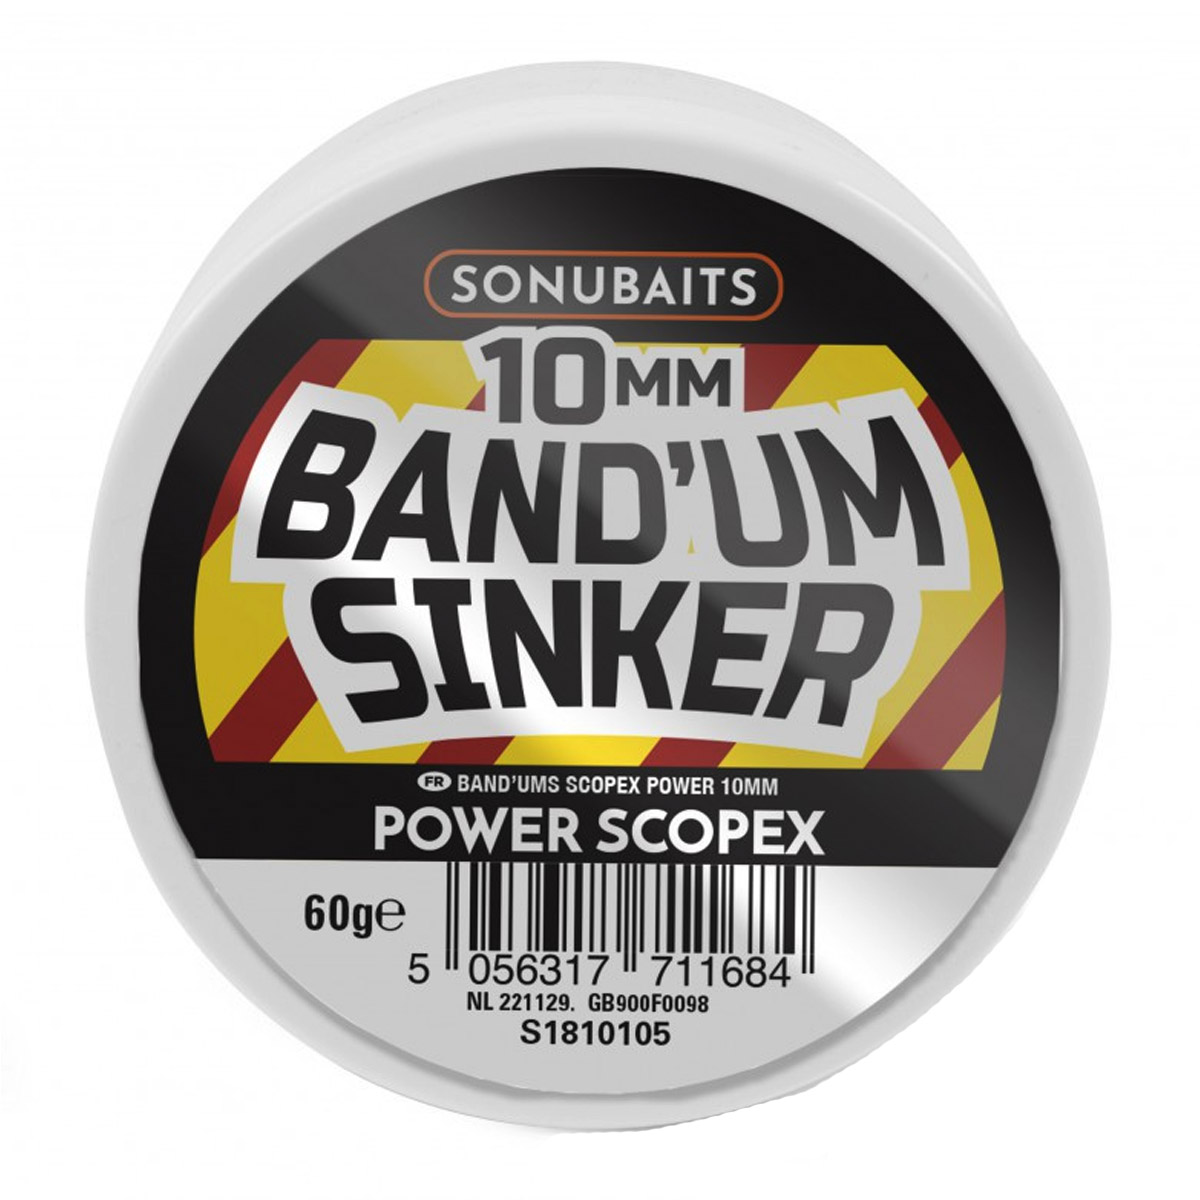 Sonubaits Band'um Sinker Power Scopex